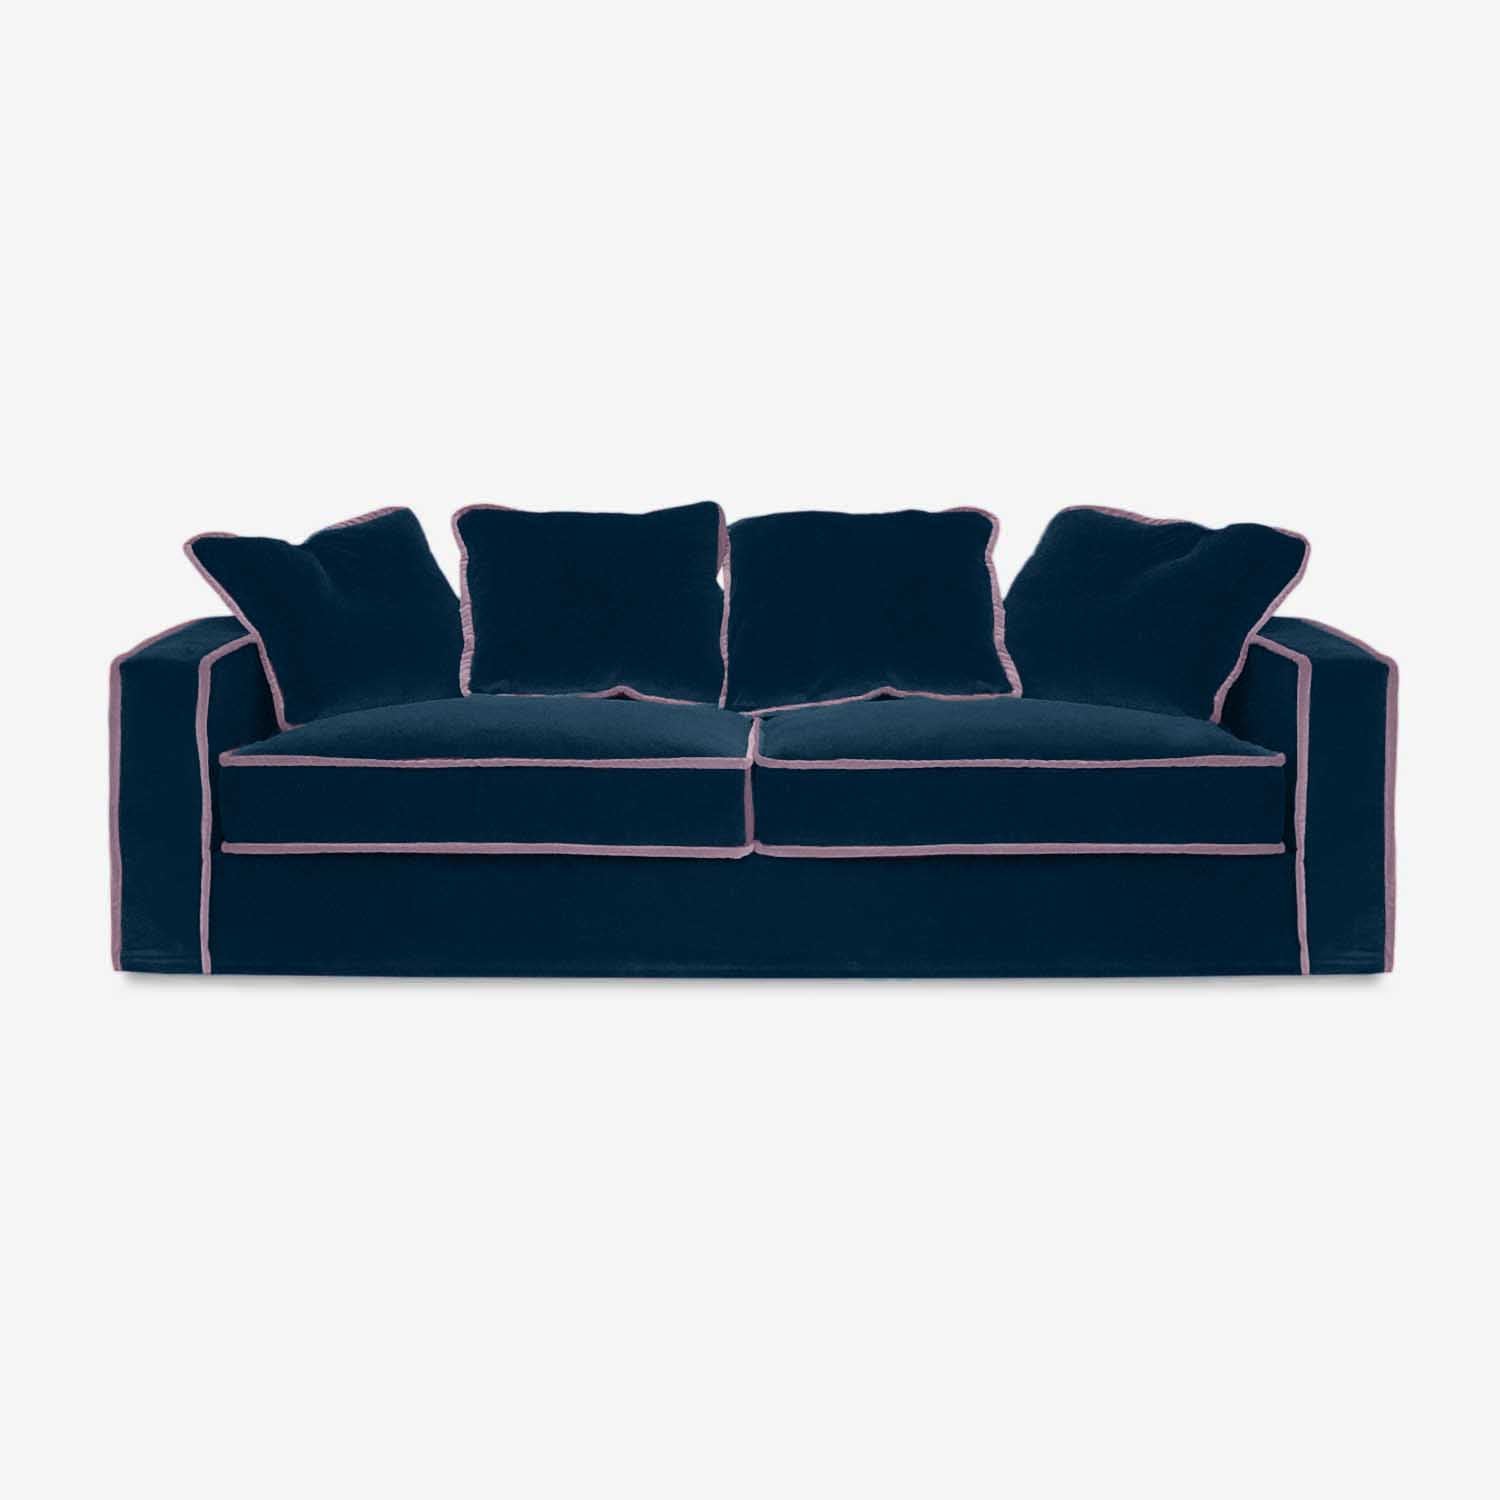 Cozy Lounging Experience, dark blue velvet sofa